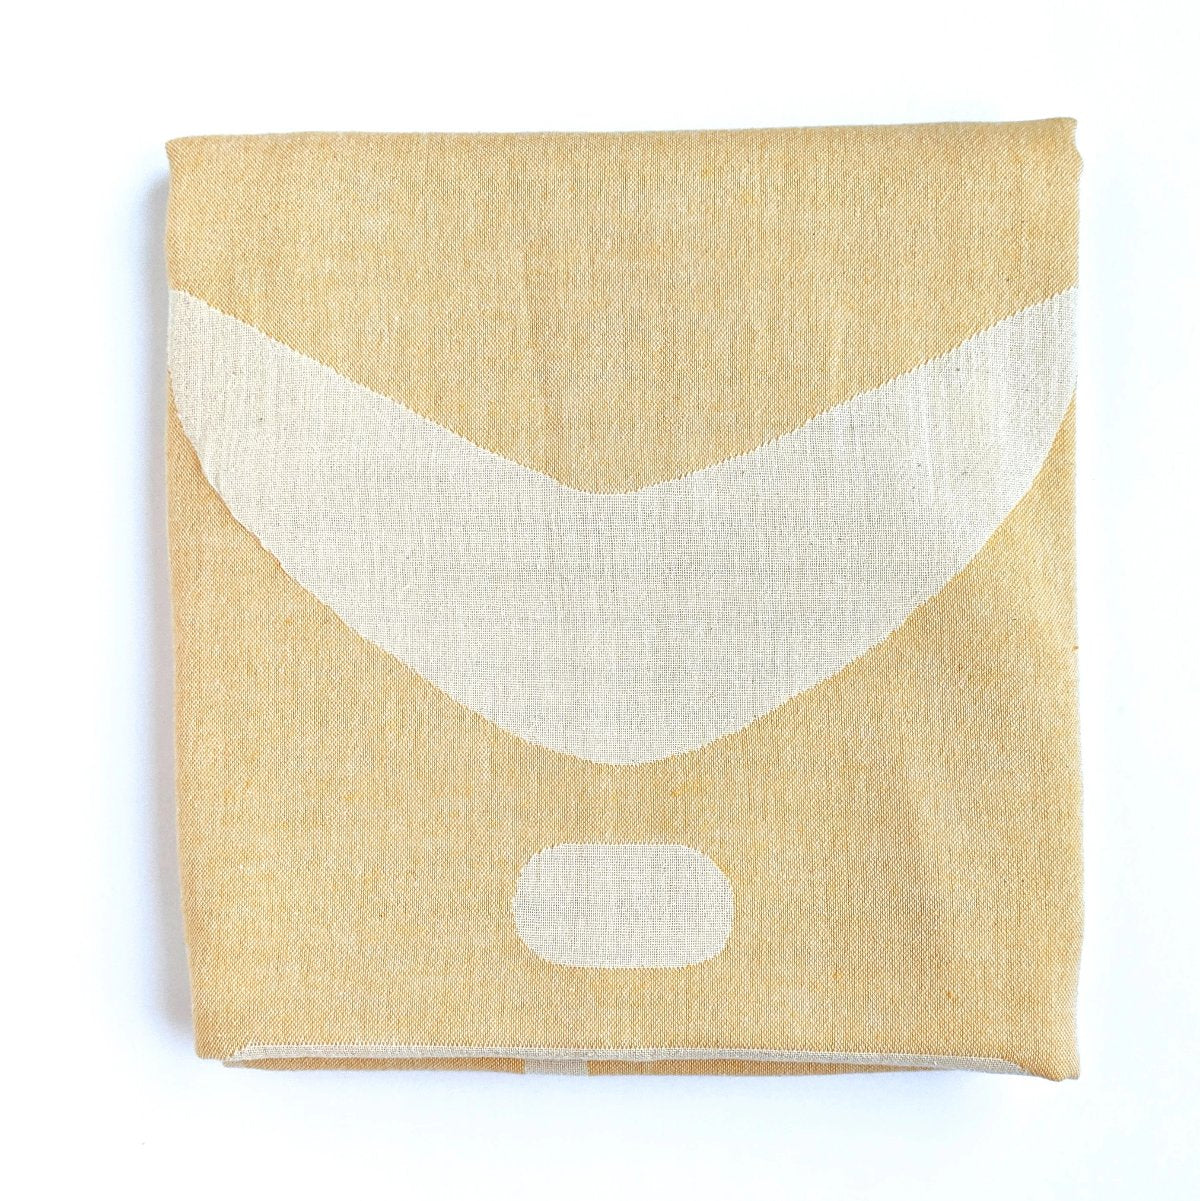 Turkish Towel, Fish Bone Designs, Yellow, Reversible, for Travel Beach Bath, absorbent, durable 